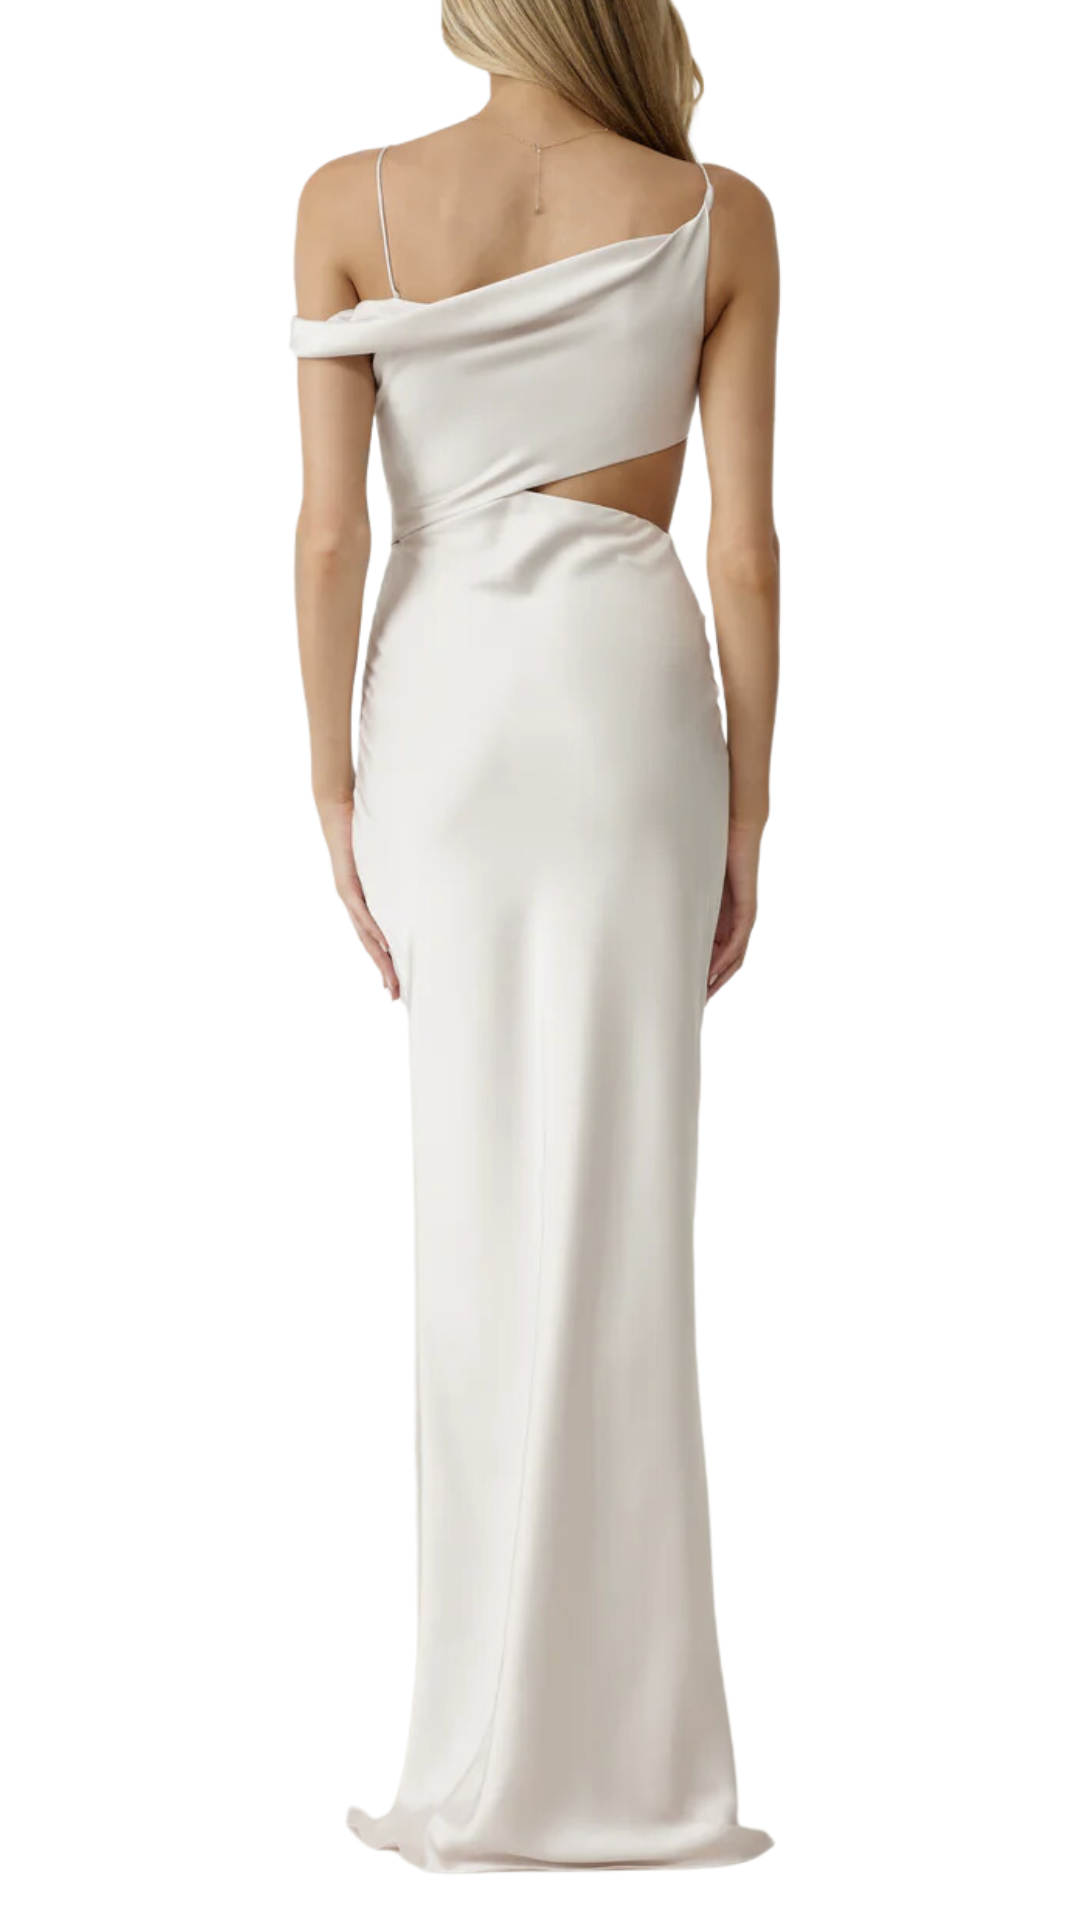 Lexi Zaria Asymmetric Dress in Pearl